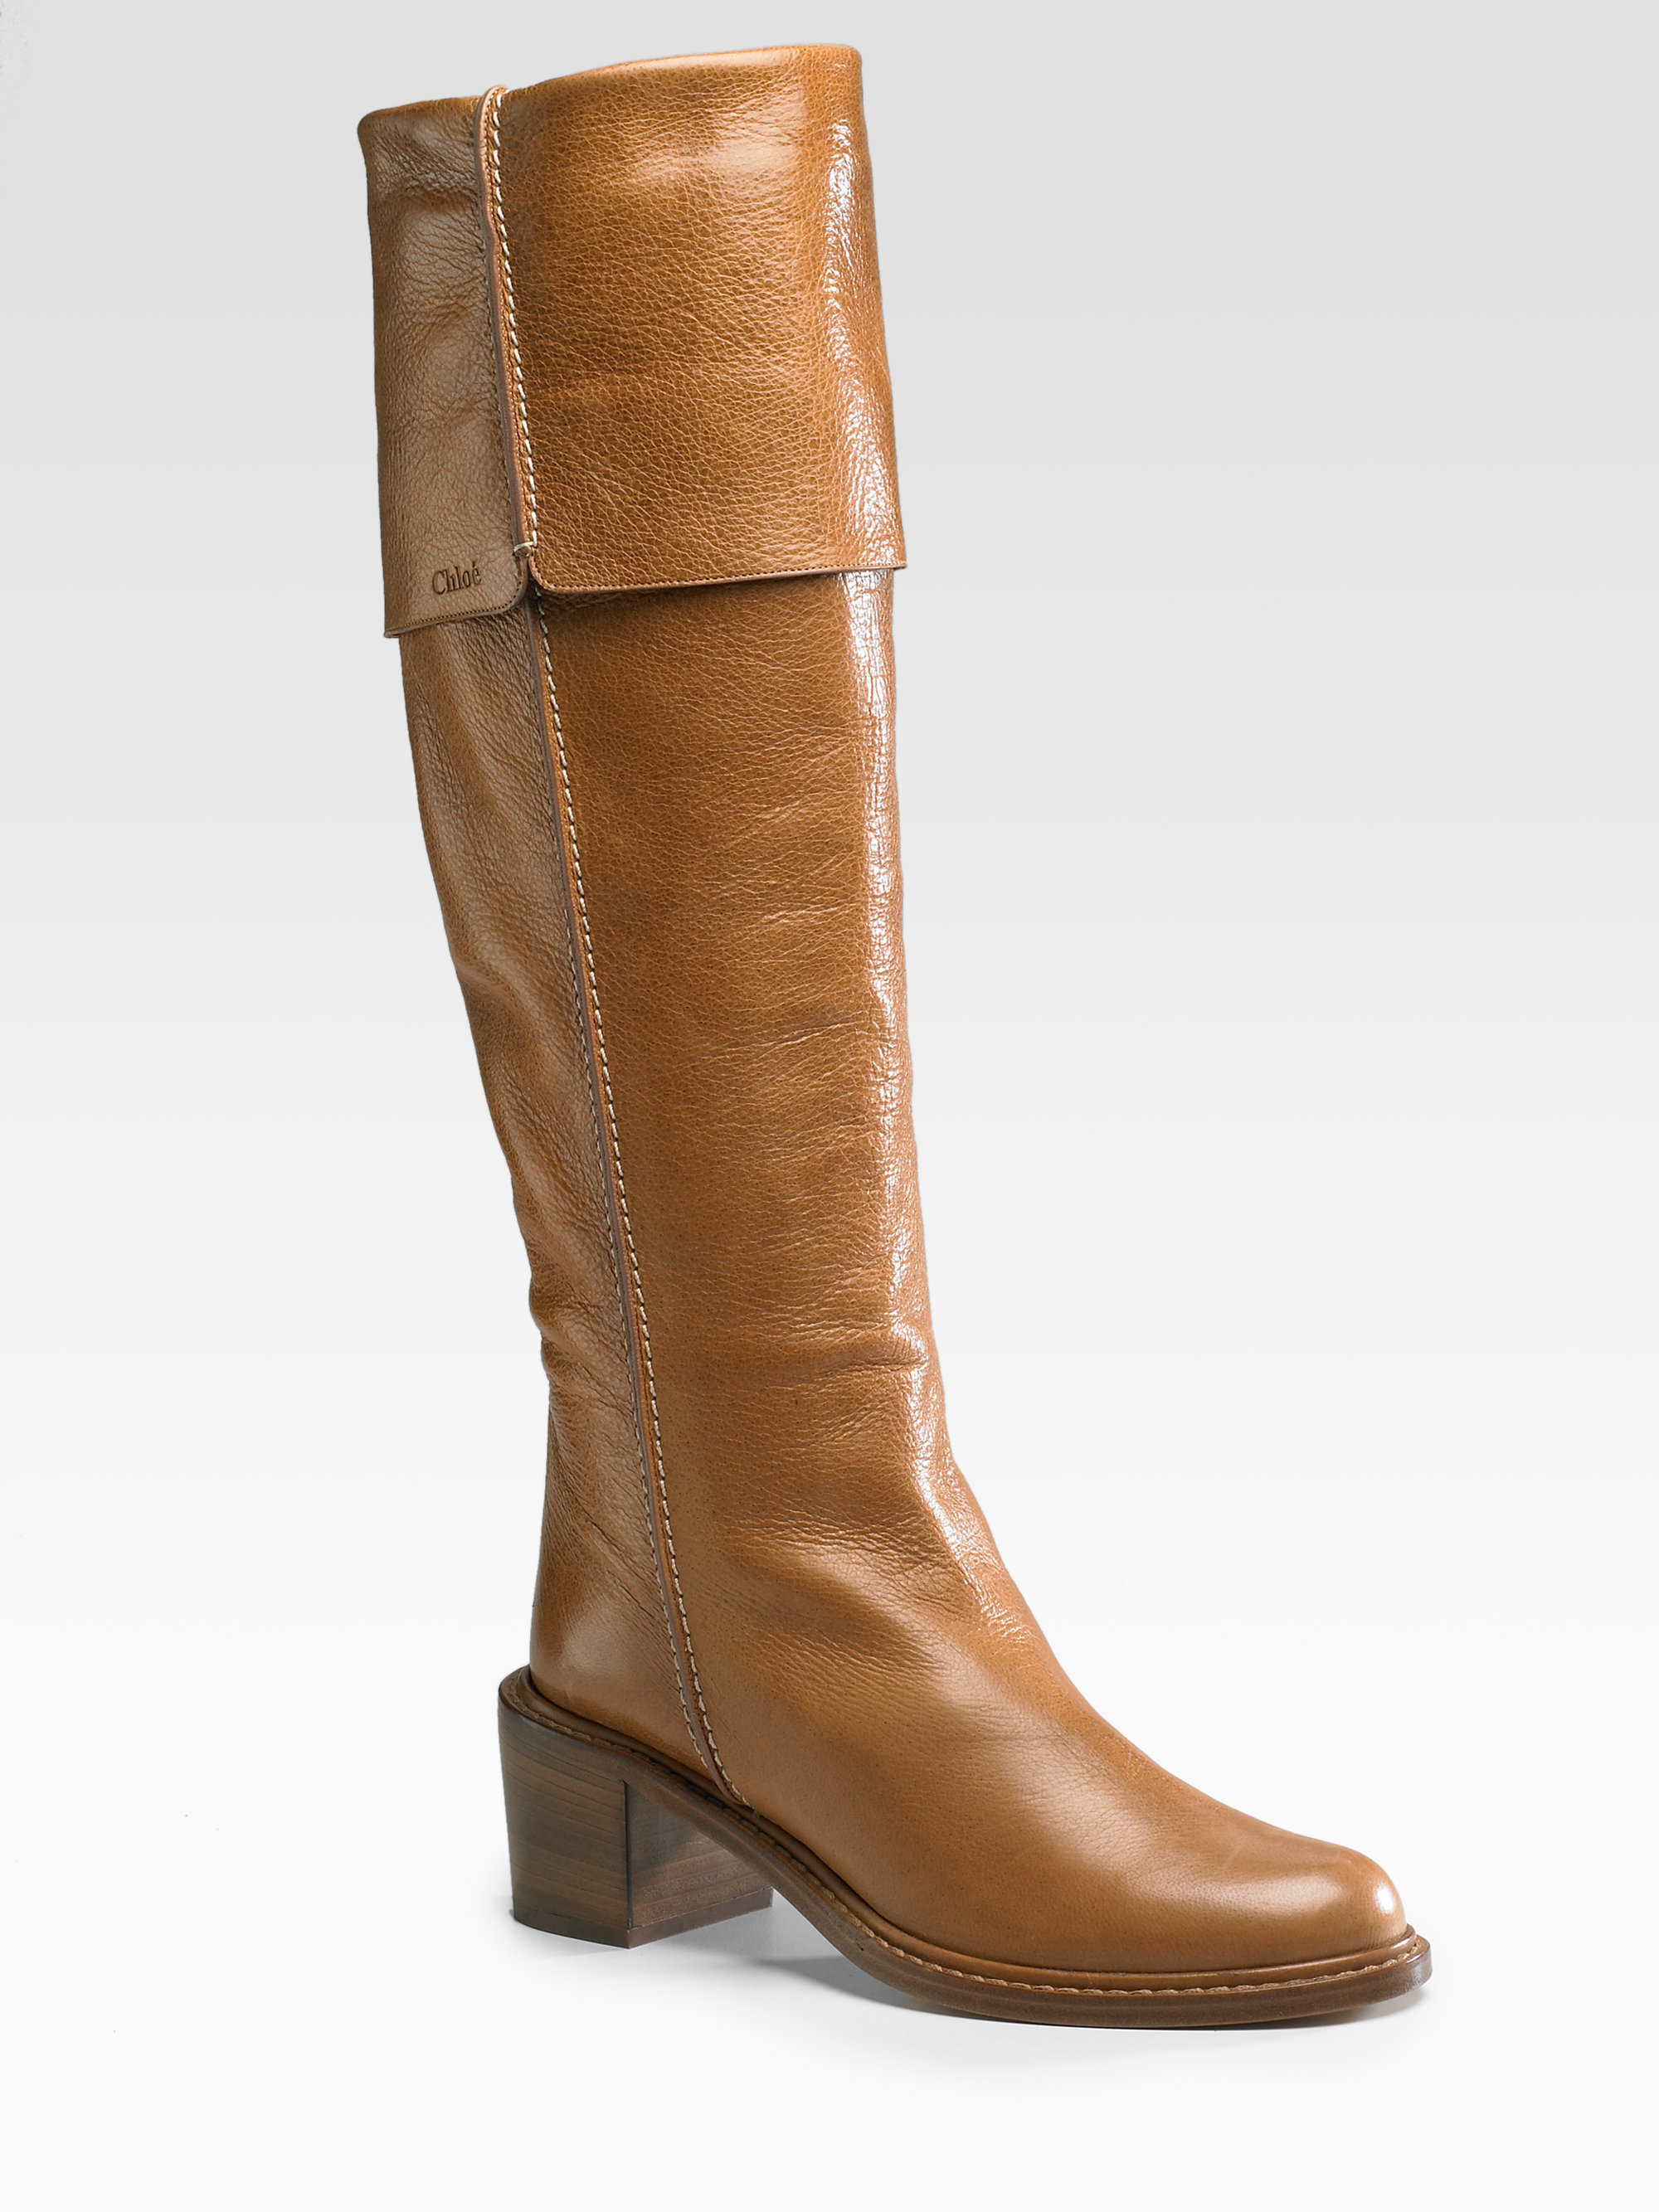 Chloé Tall Boots in Brown (tan) | Lyst